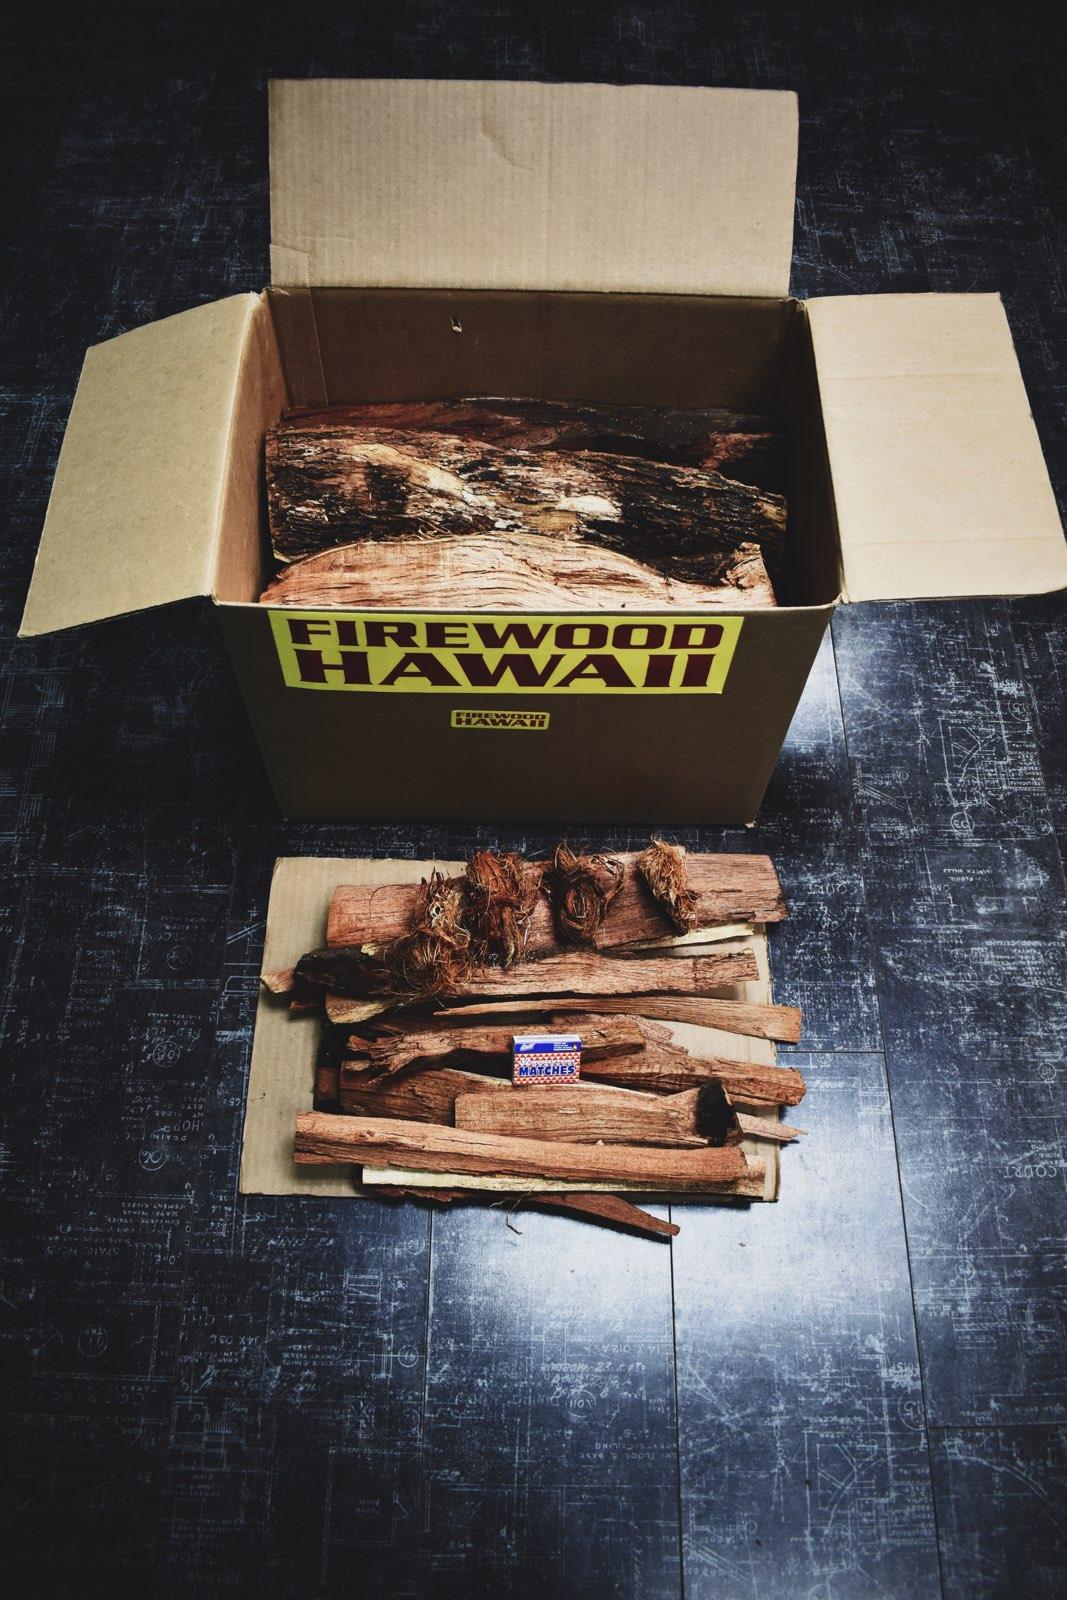 KIAWE SPLIT FIREWOOD LARGE BOX - FIREWOOD HAWAII